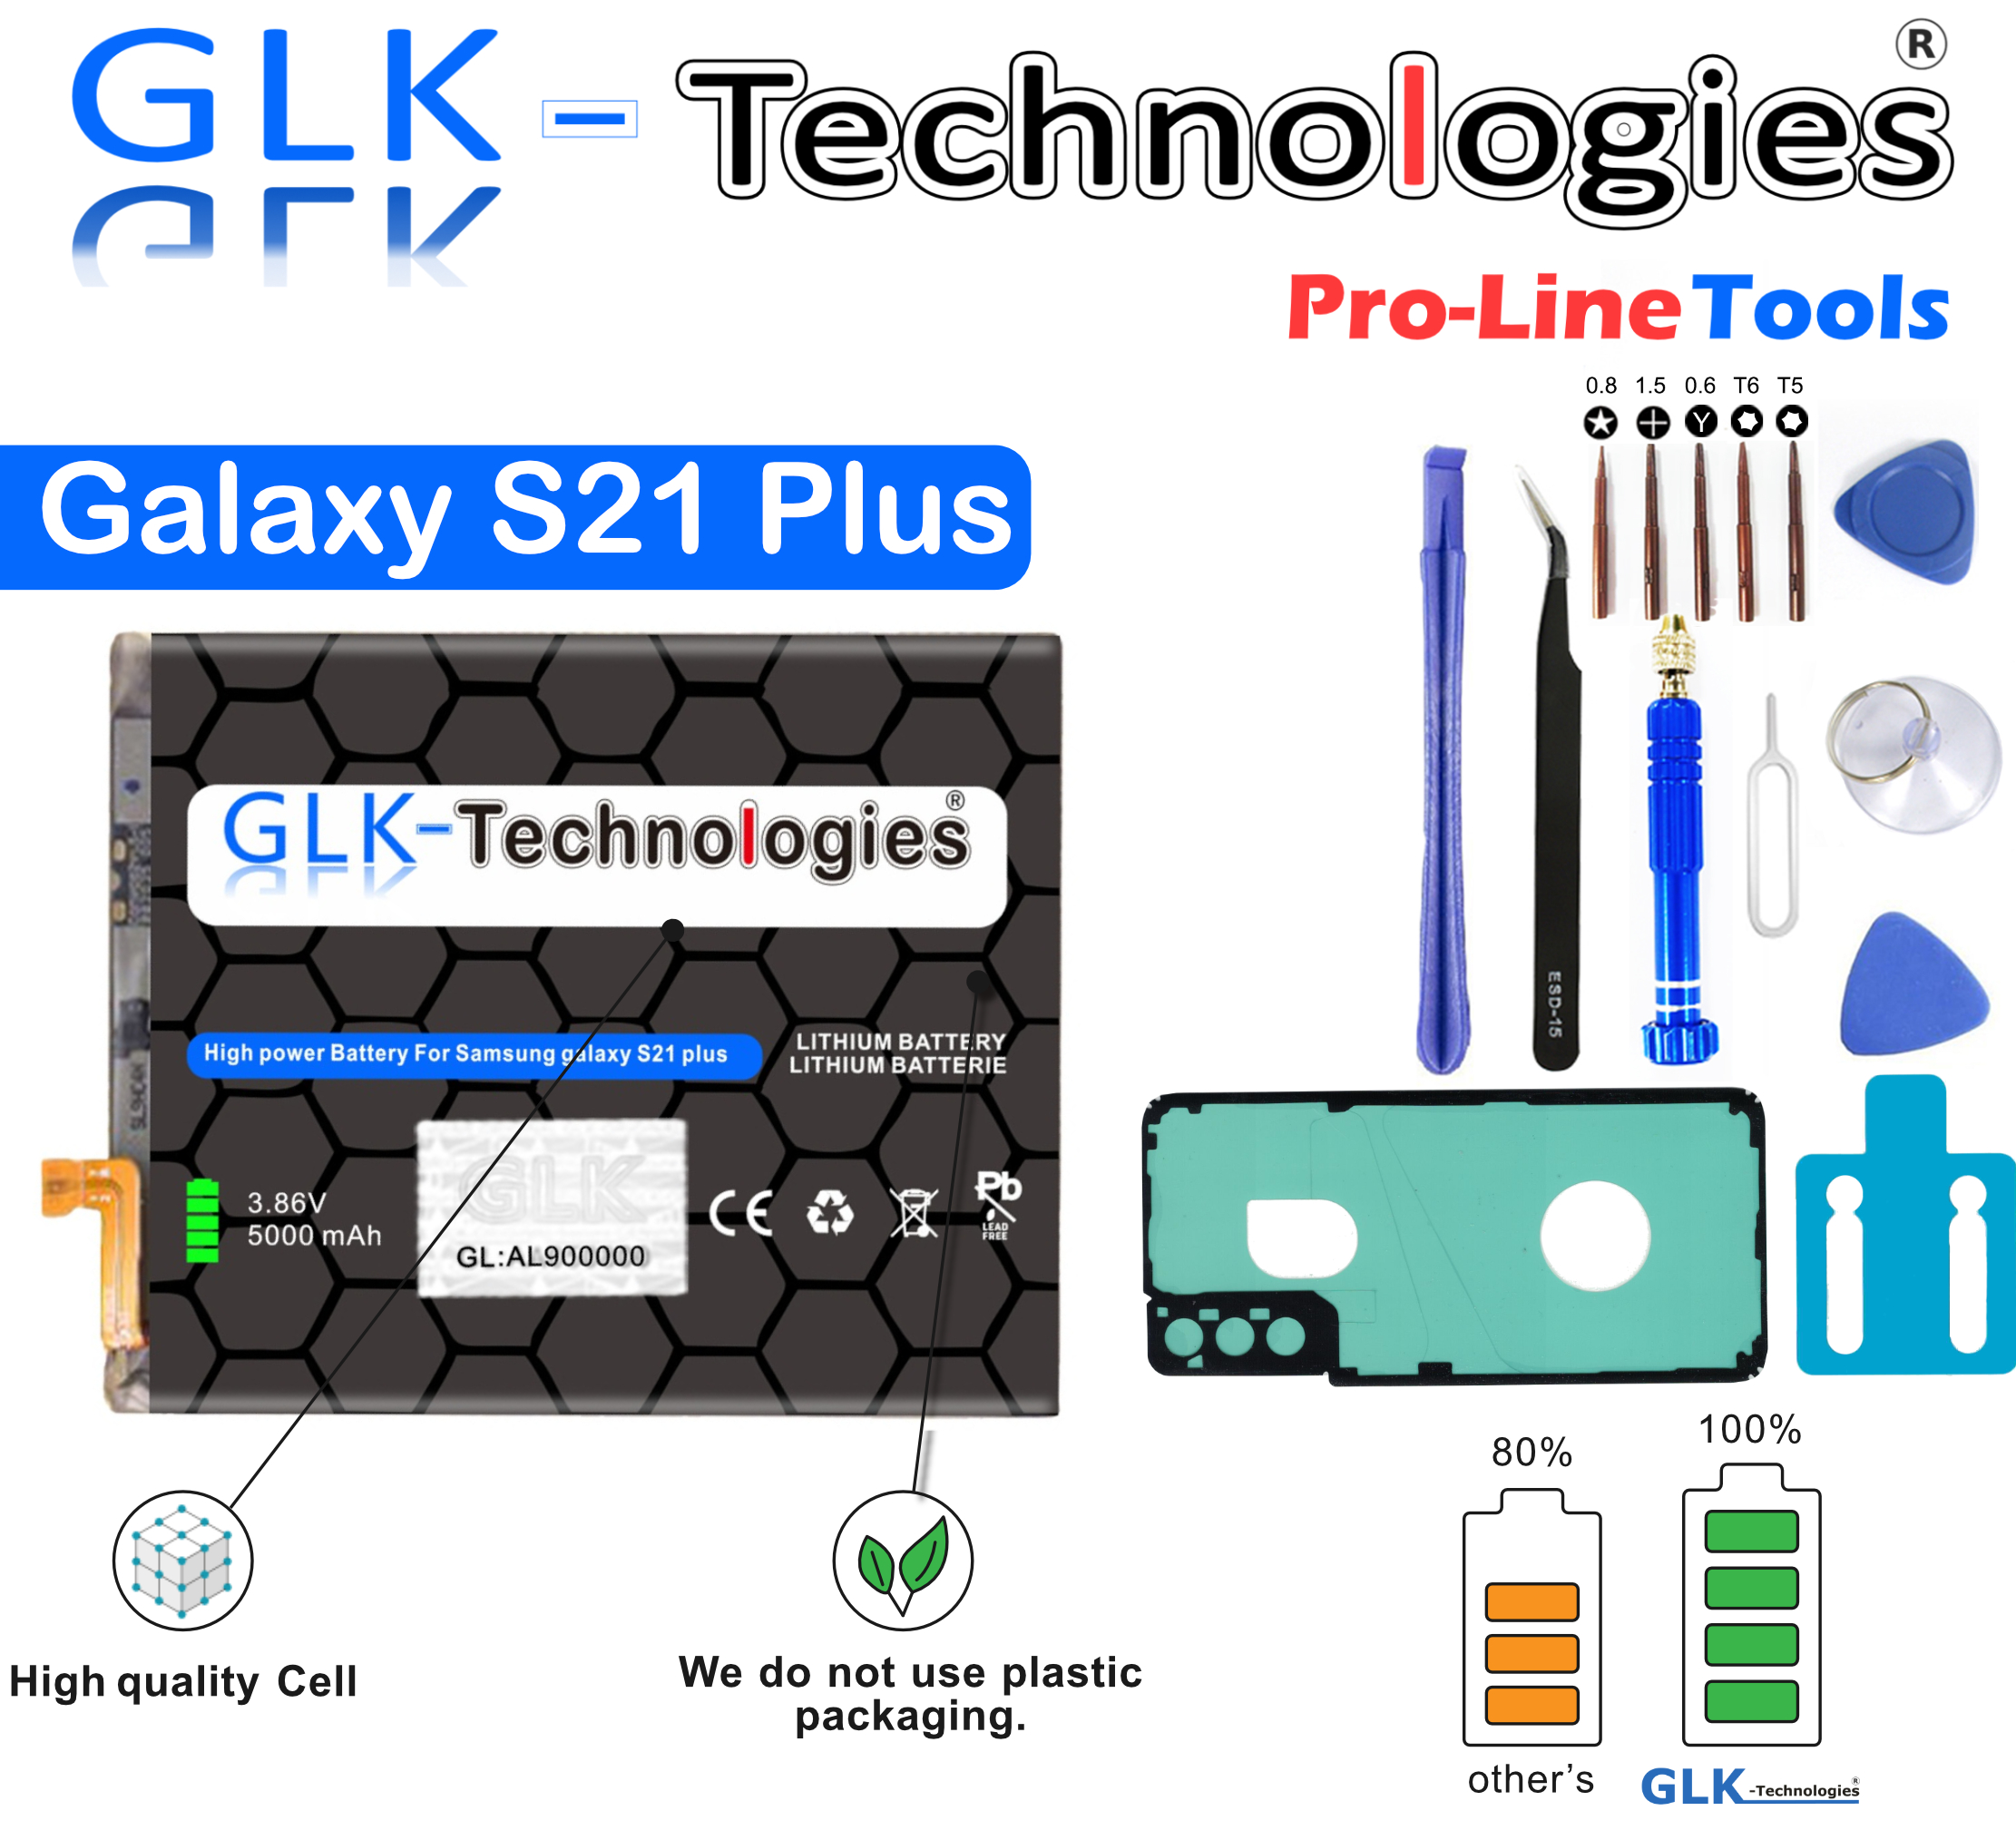 GLK-TECHNOLOGIES Samsung inkl. S21 EB-BG996ABY Lithium-Ionen-Akku Galaxy Set G996B Akku, 4200mAh PROFI Plus Smartphone Werkzeug 4200mAh